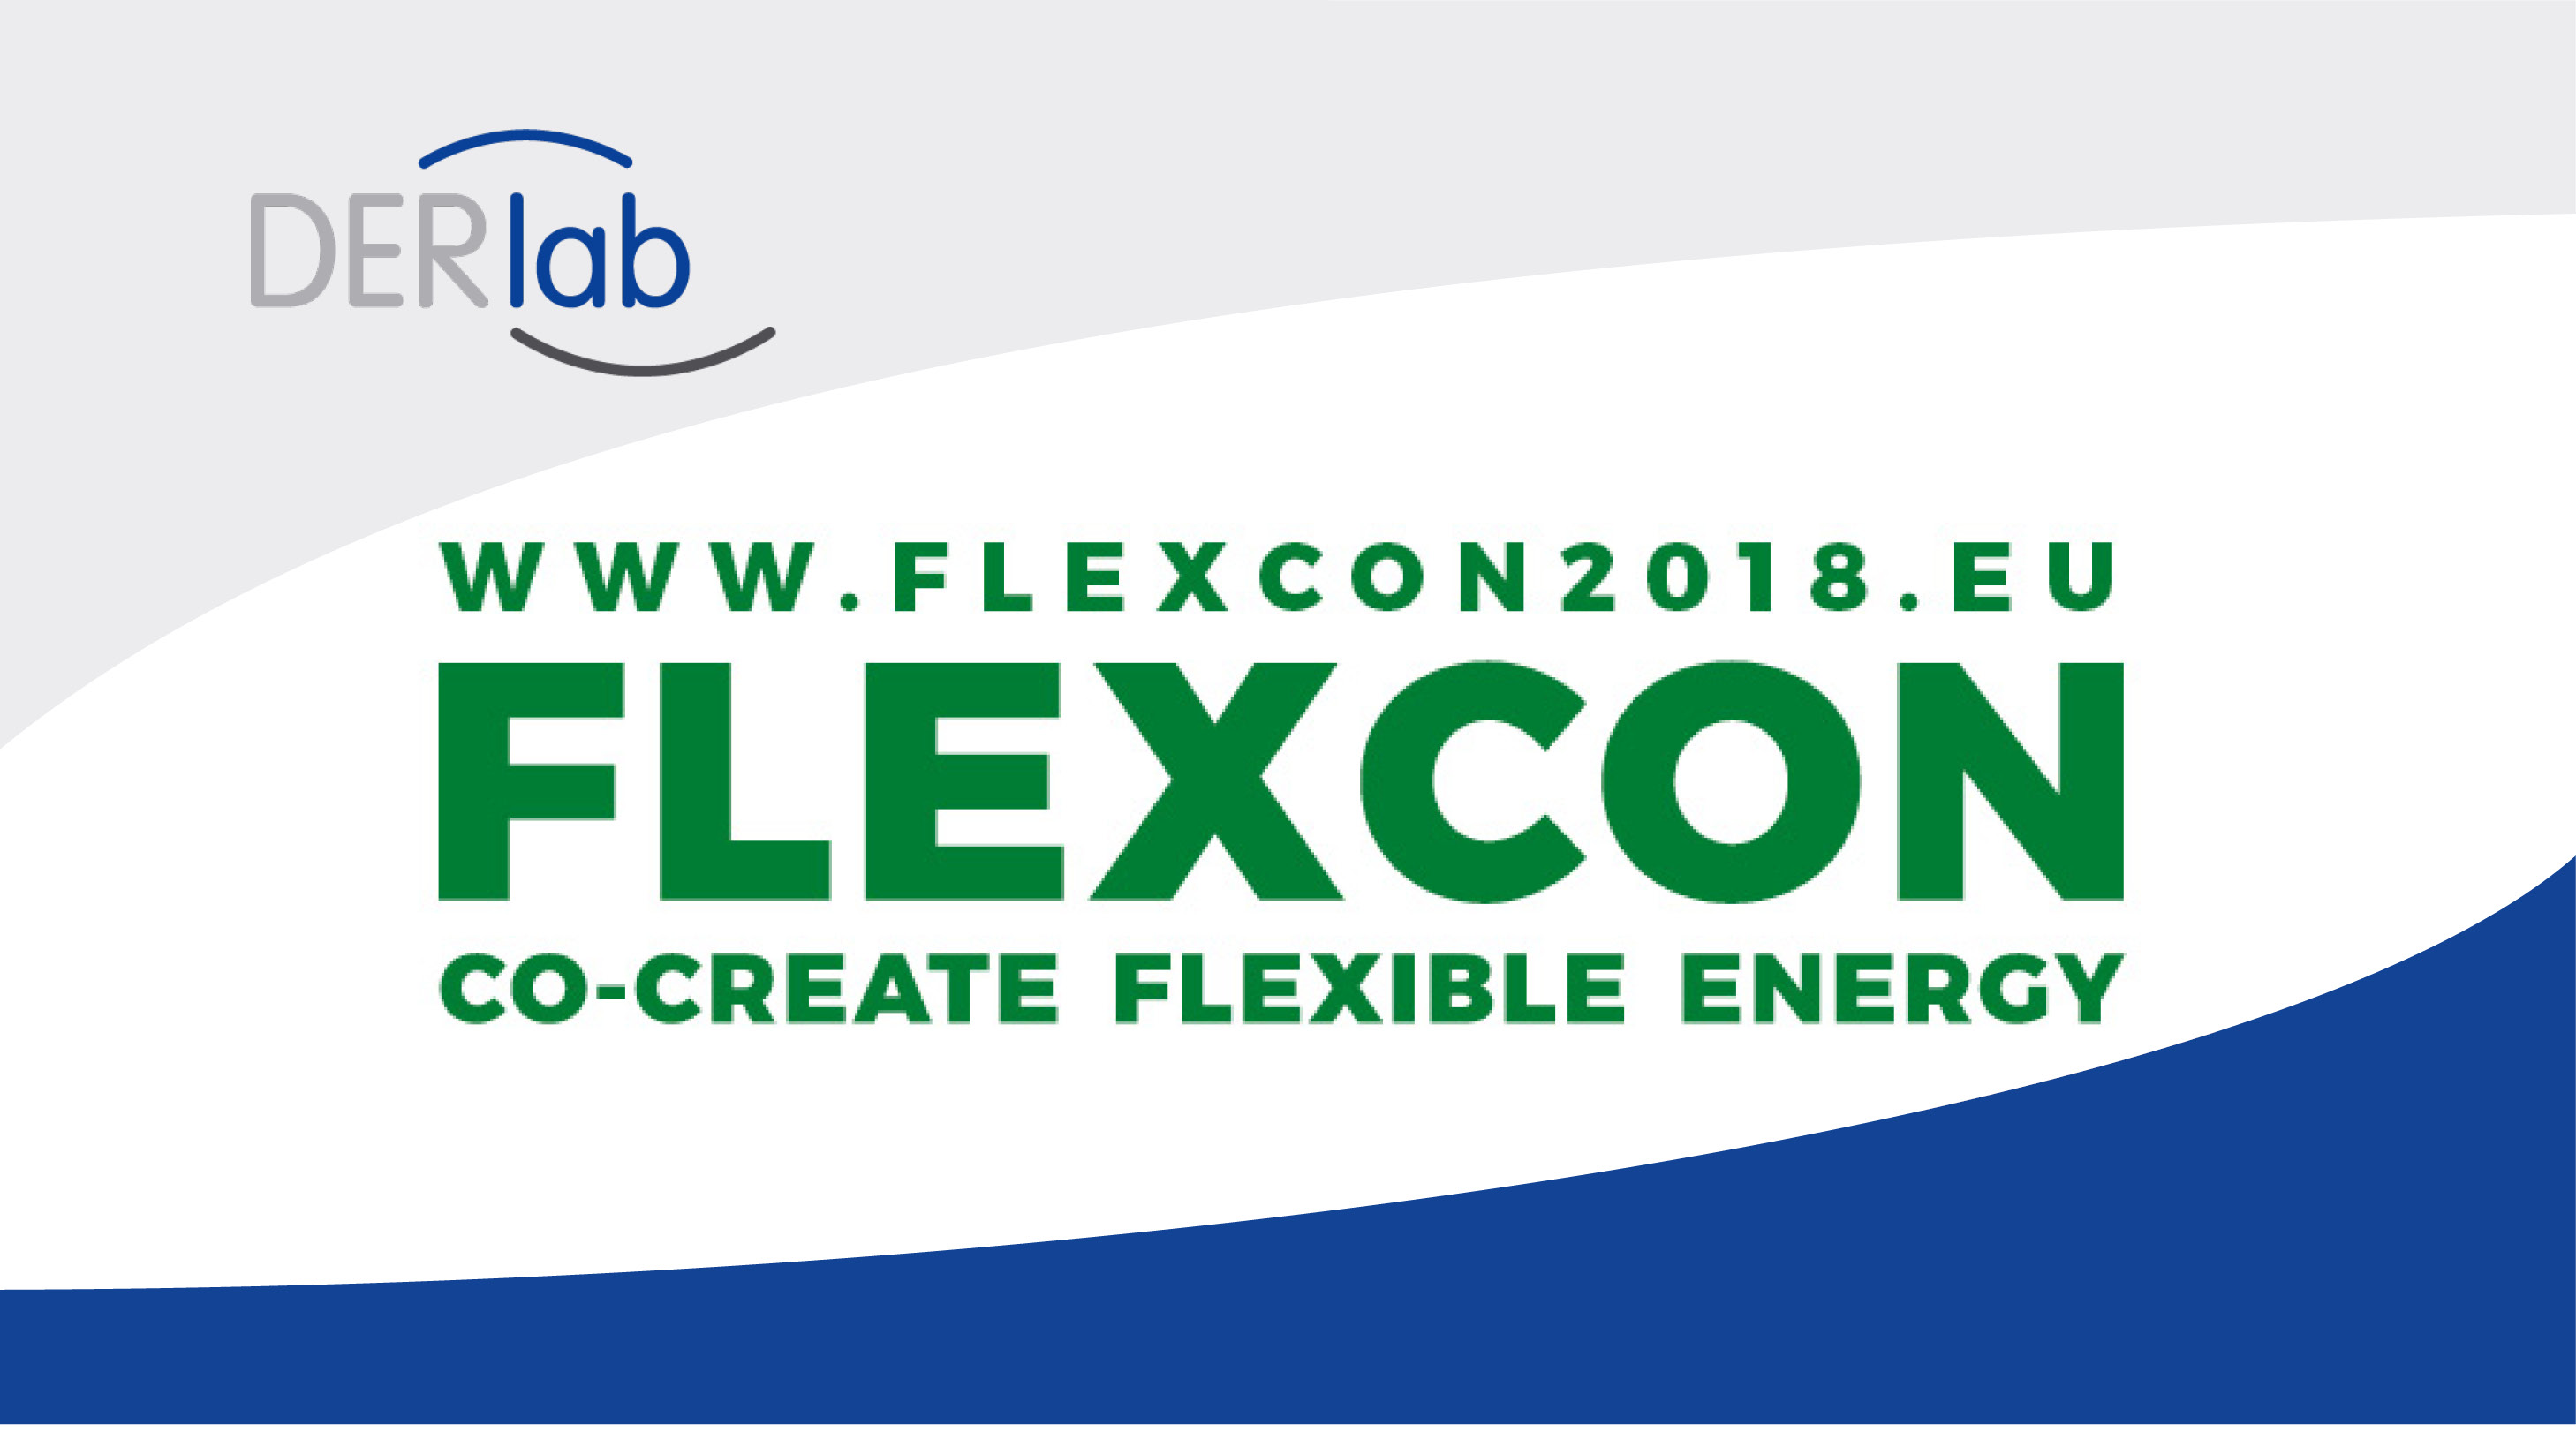 DERlab partners with FLEXCON 2018